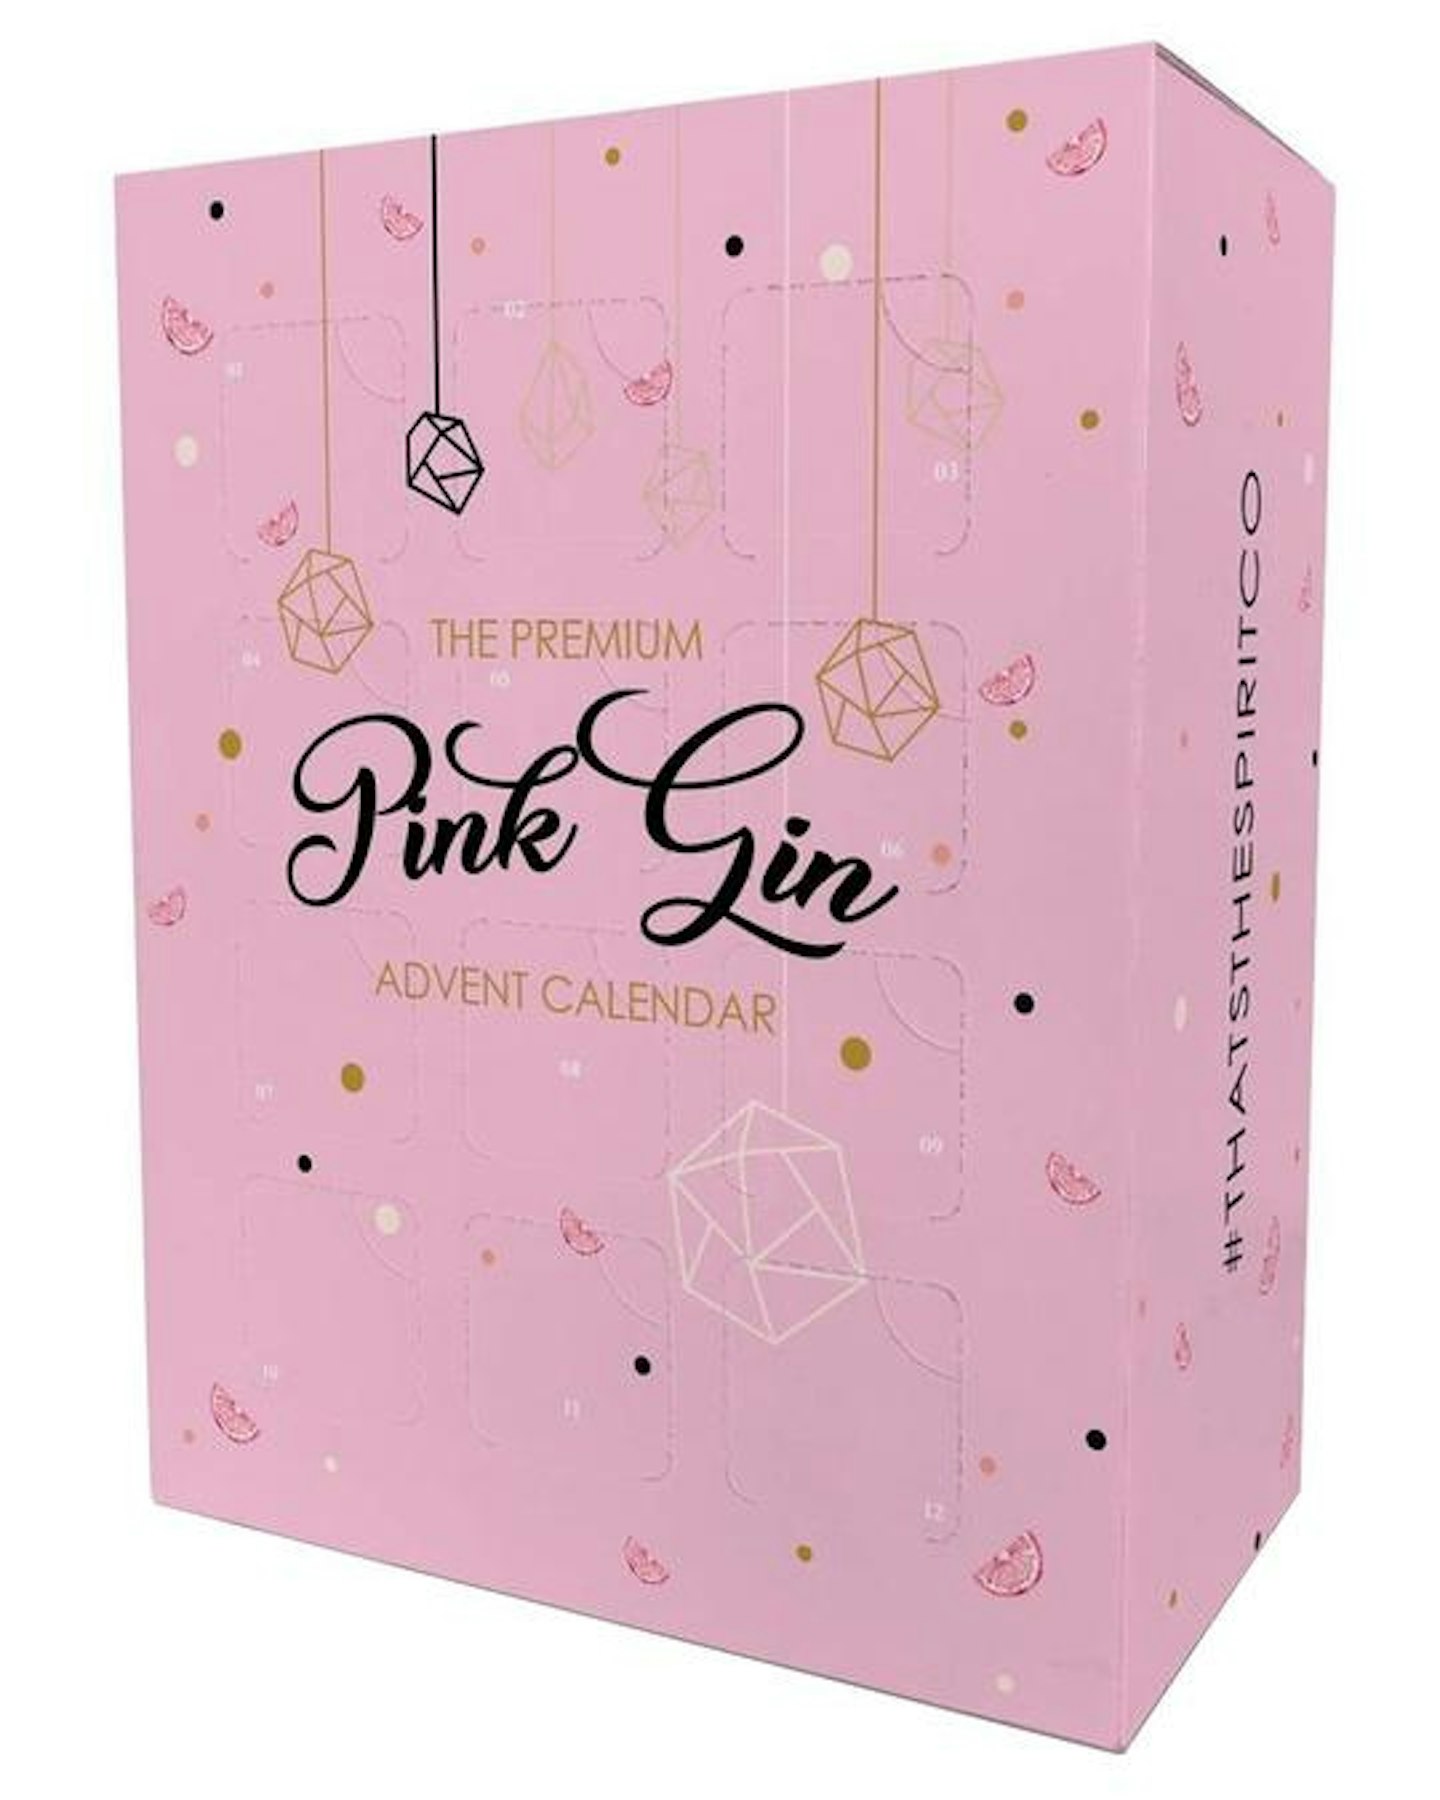 The Premium Pink Gin Calendar